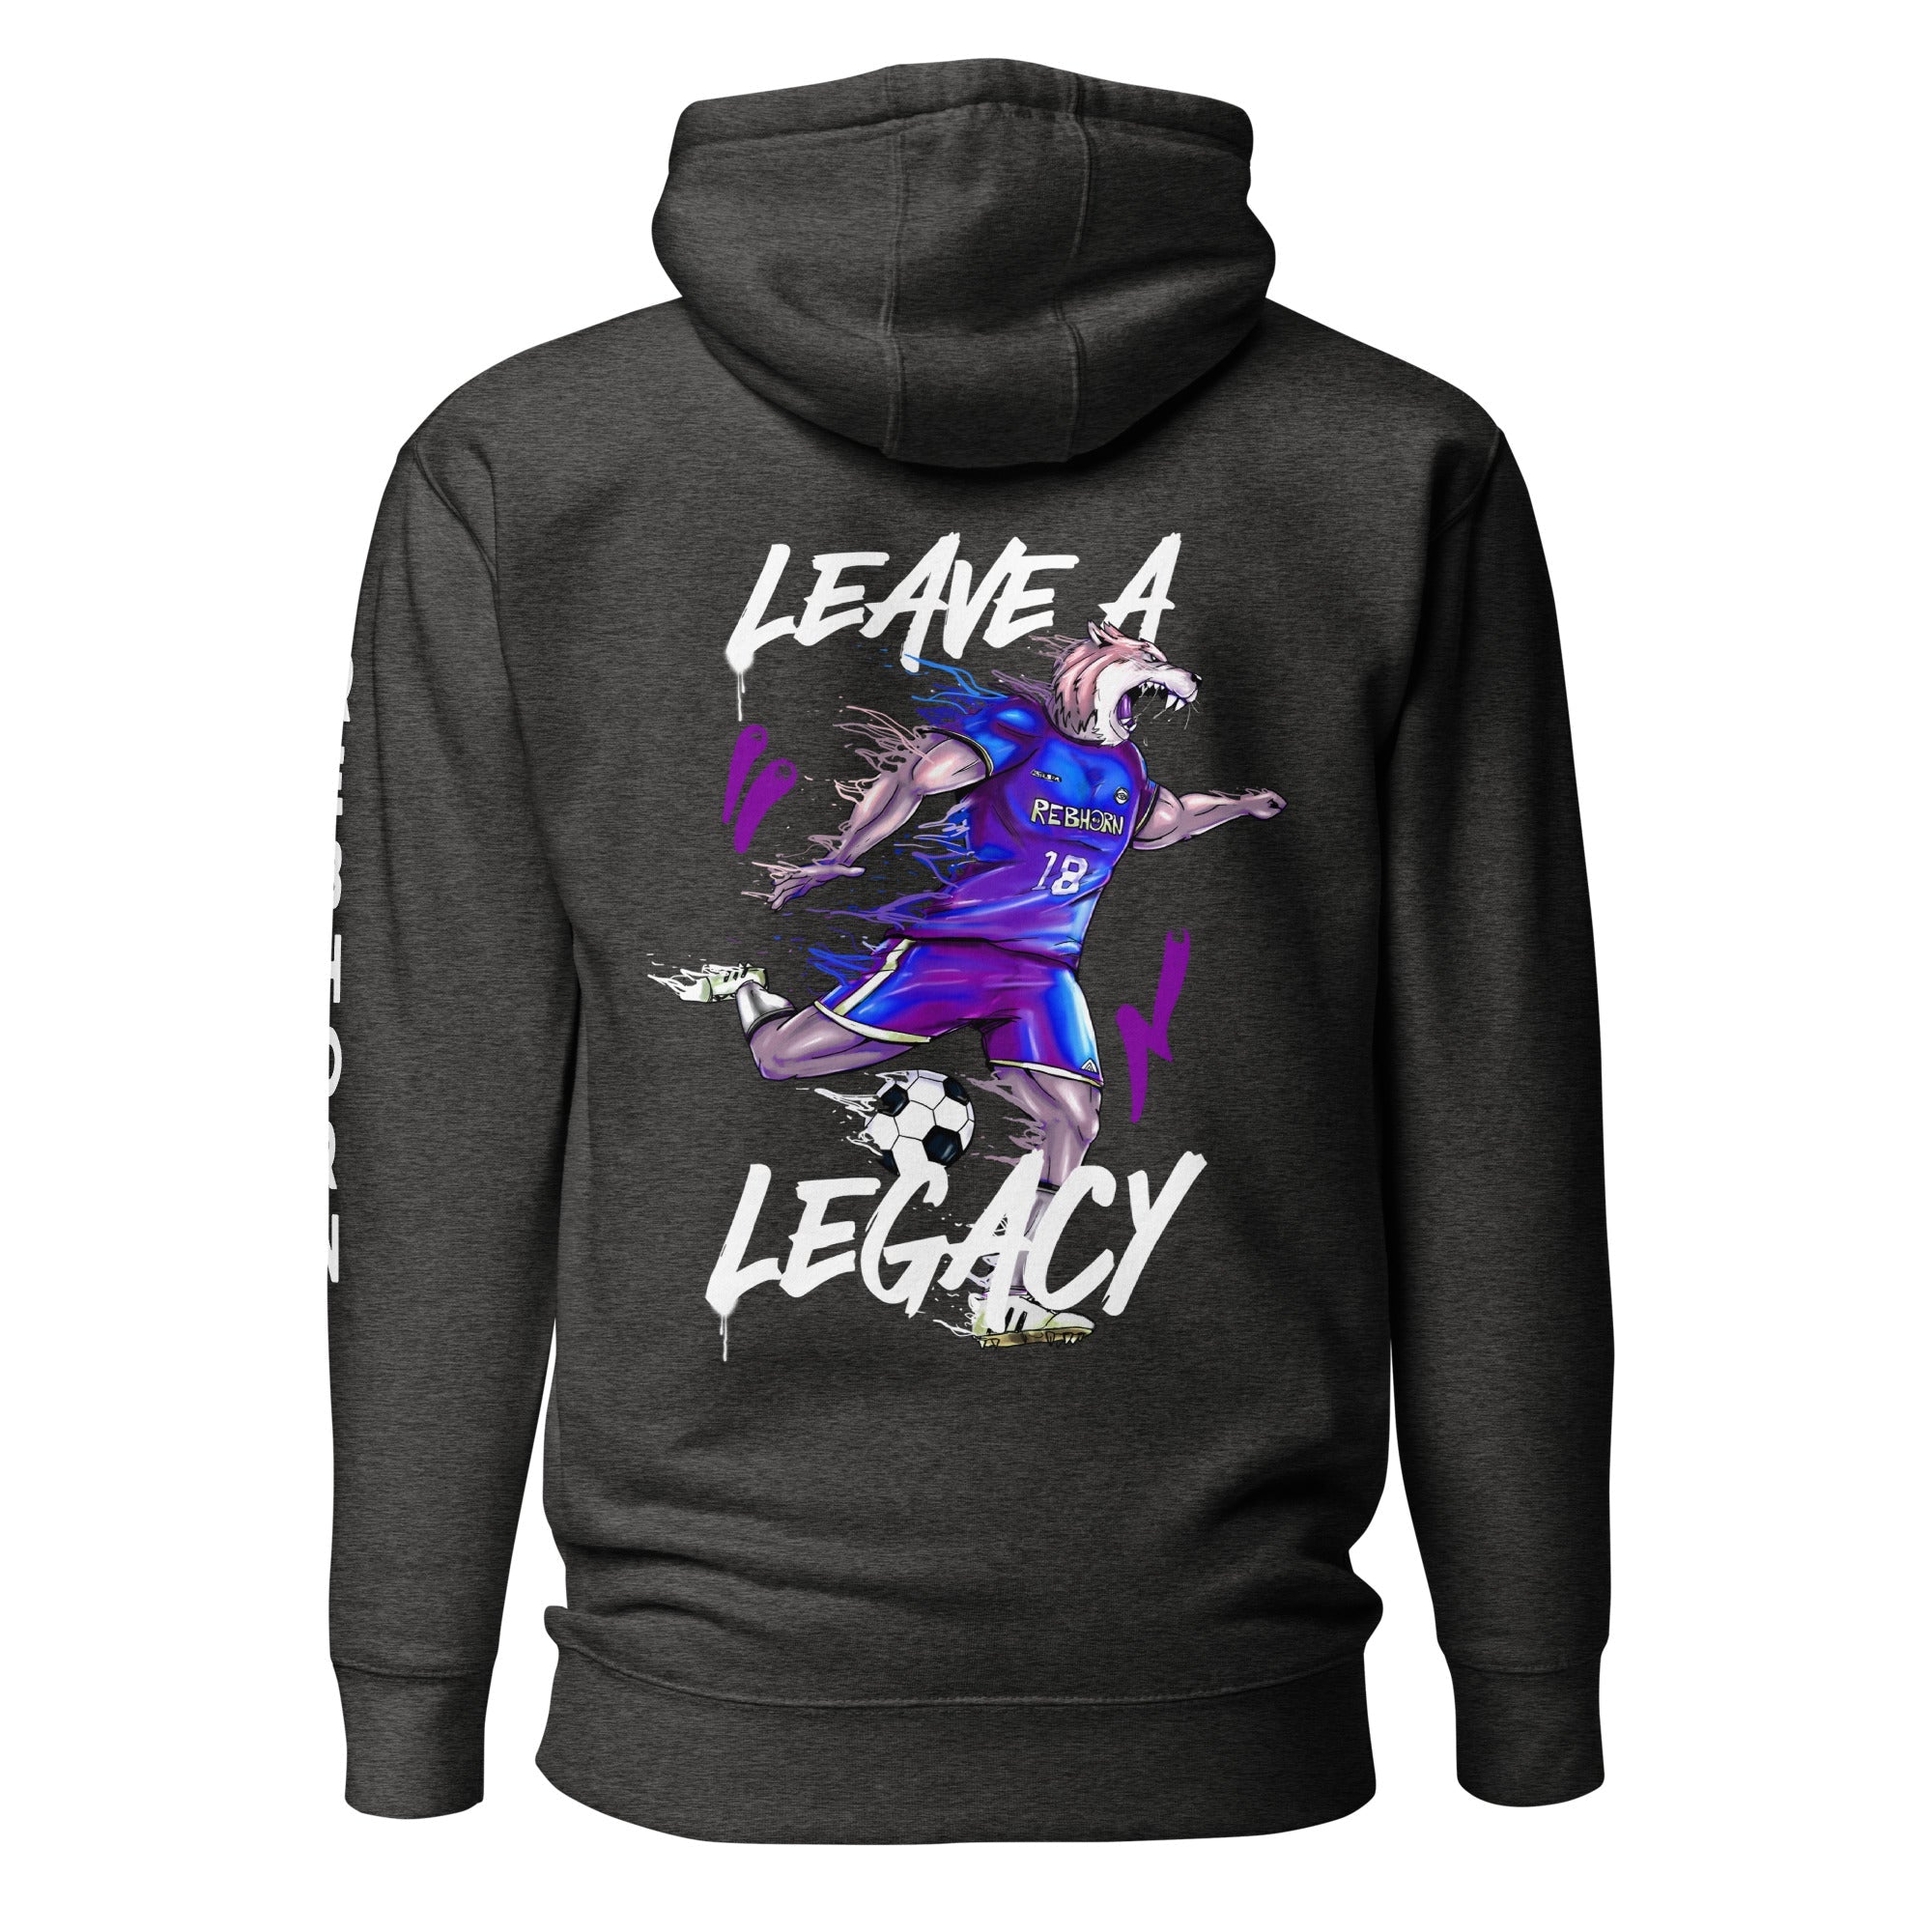 Leave A Legacy (Soccer Edition) Premium Unisex Hoodie - REBHORN DESIGN